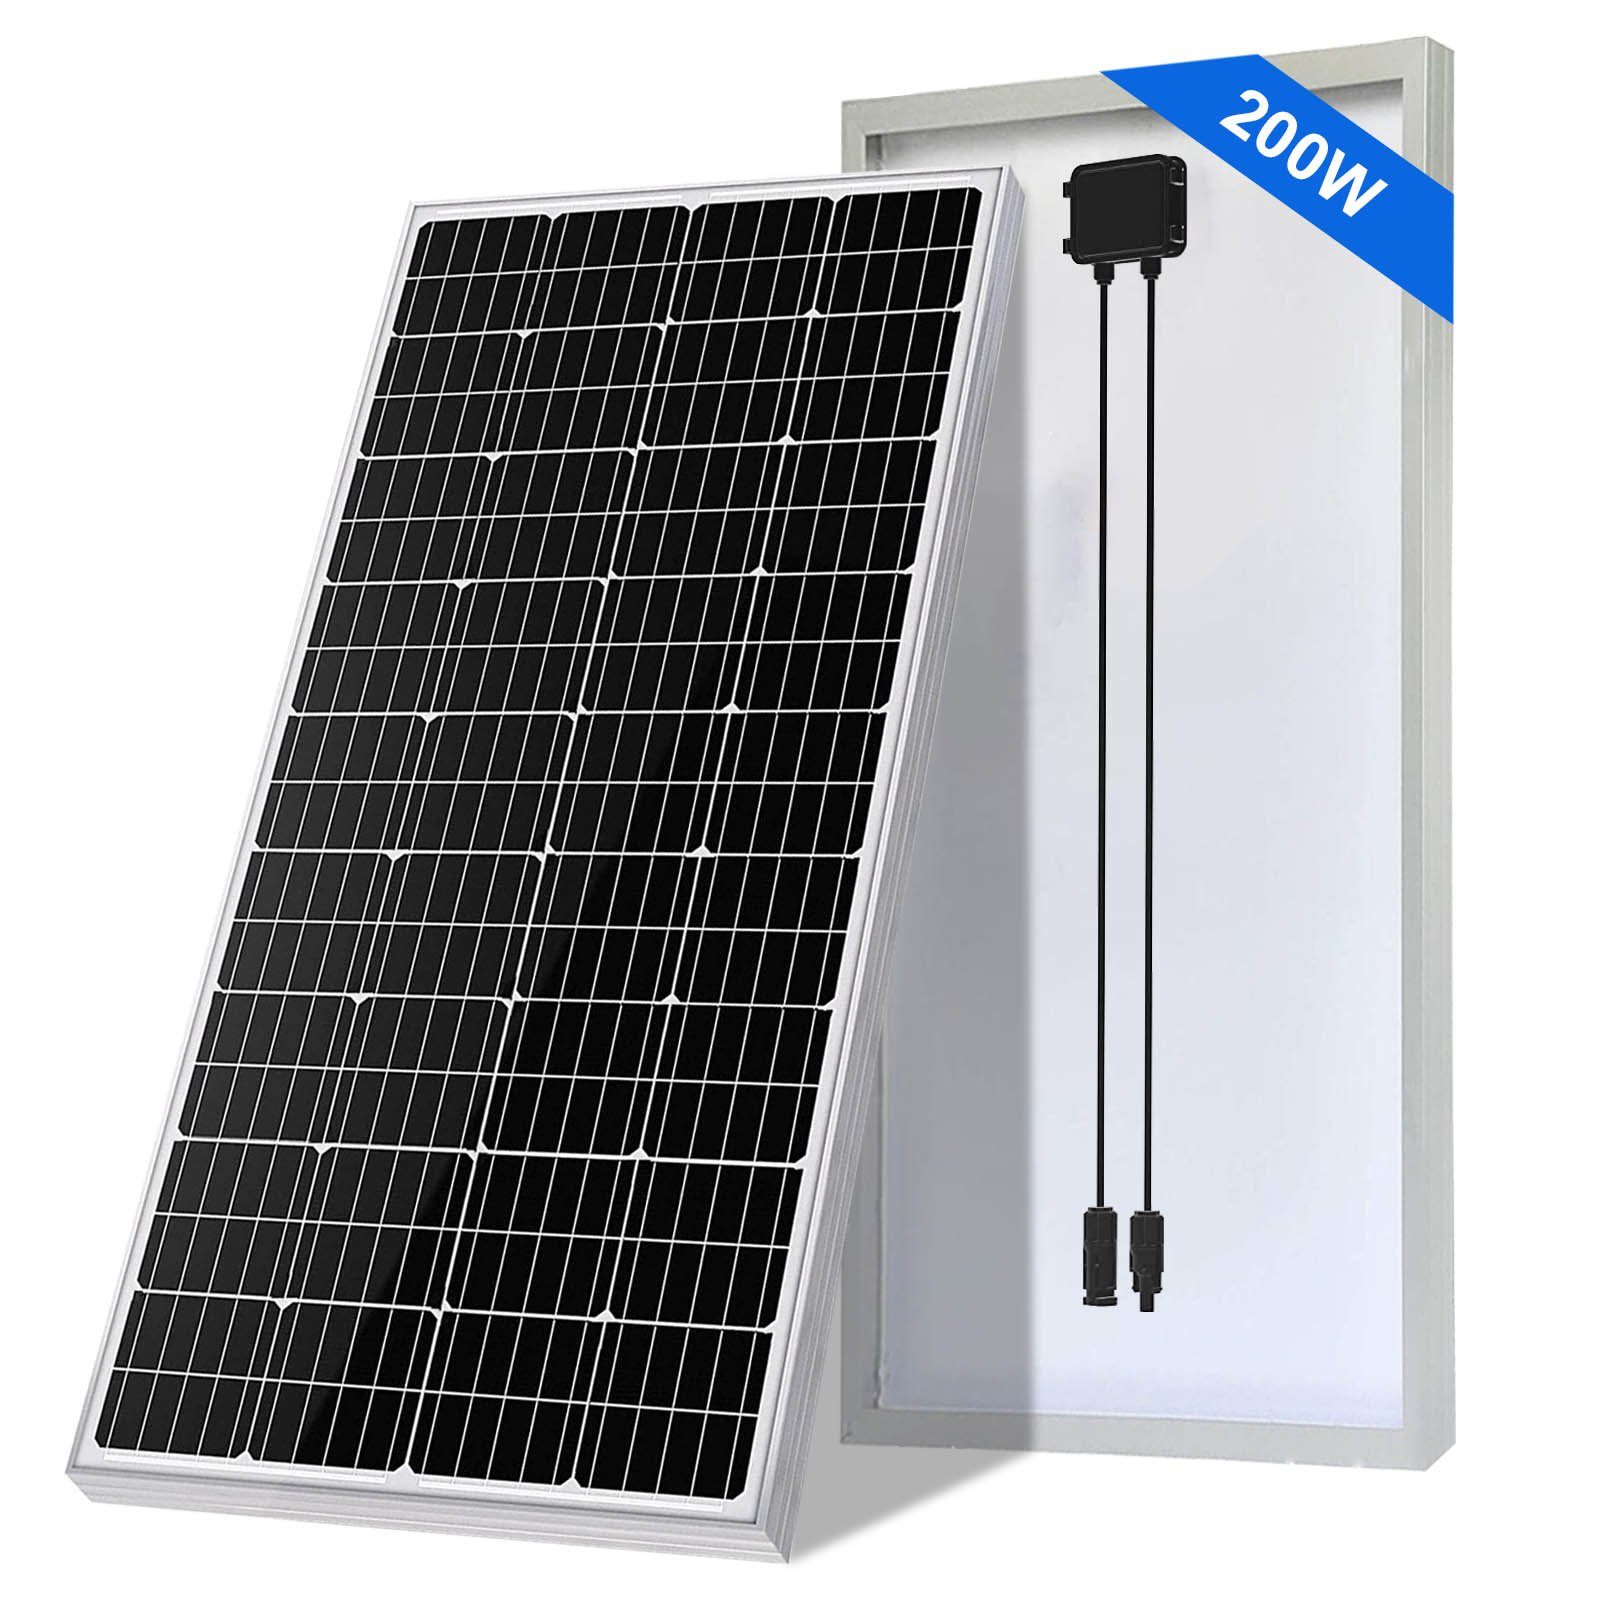 GLIESE Solarmodul 12V 100Ah LiFePO4 Batterie, 4S1P